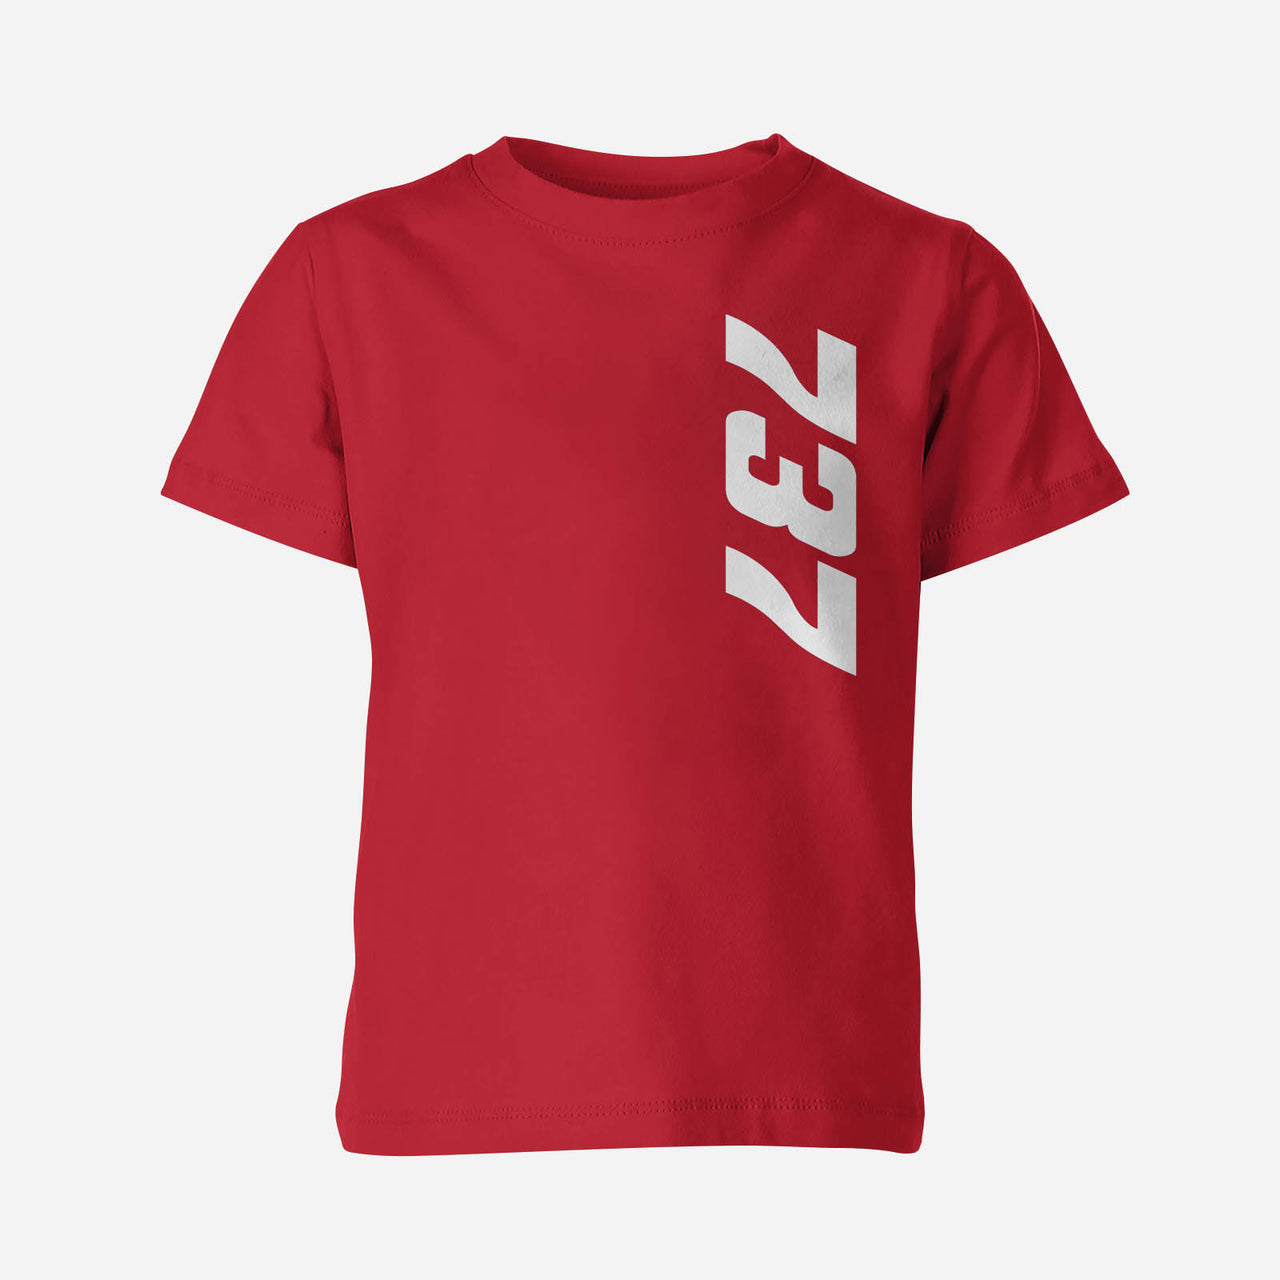 737 Side Text Designed Children T-Shirts